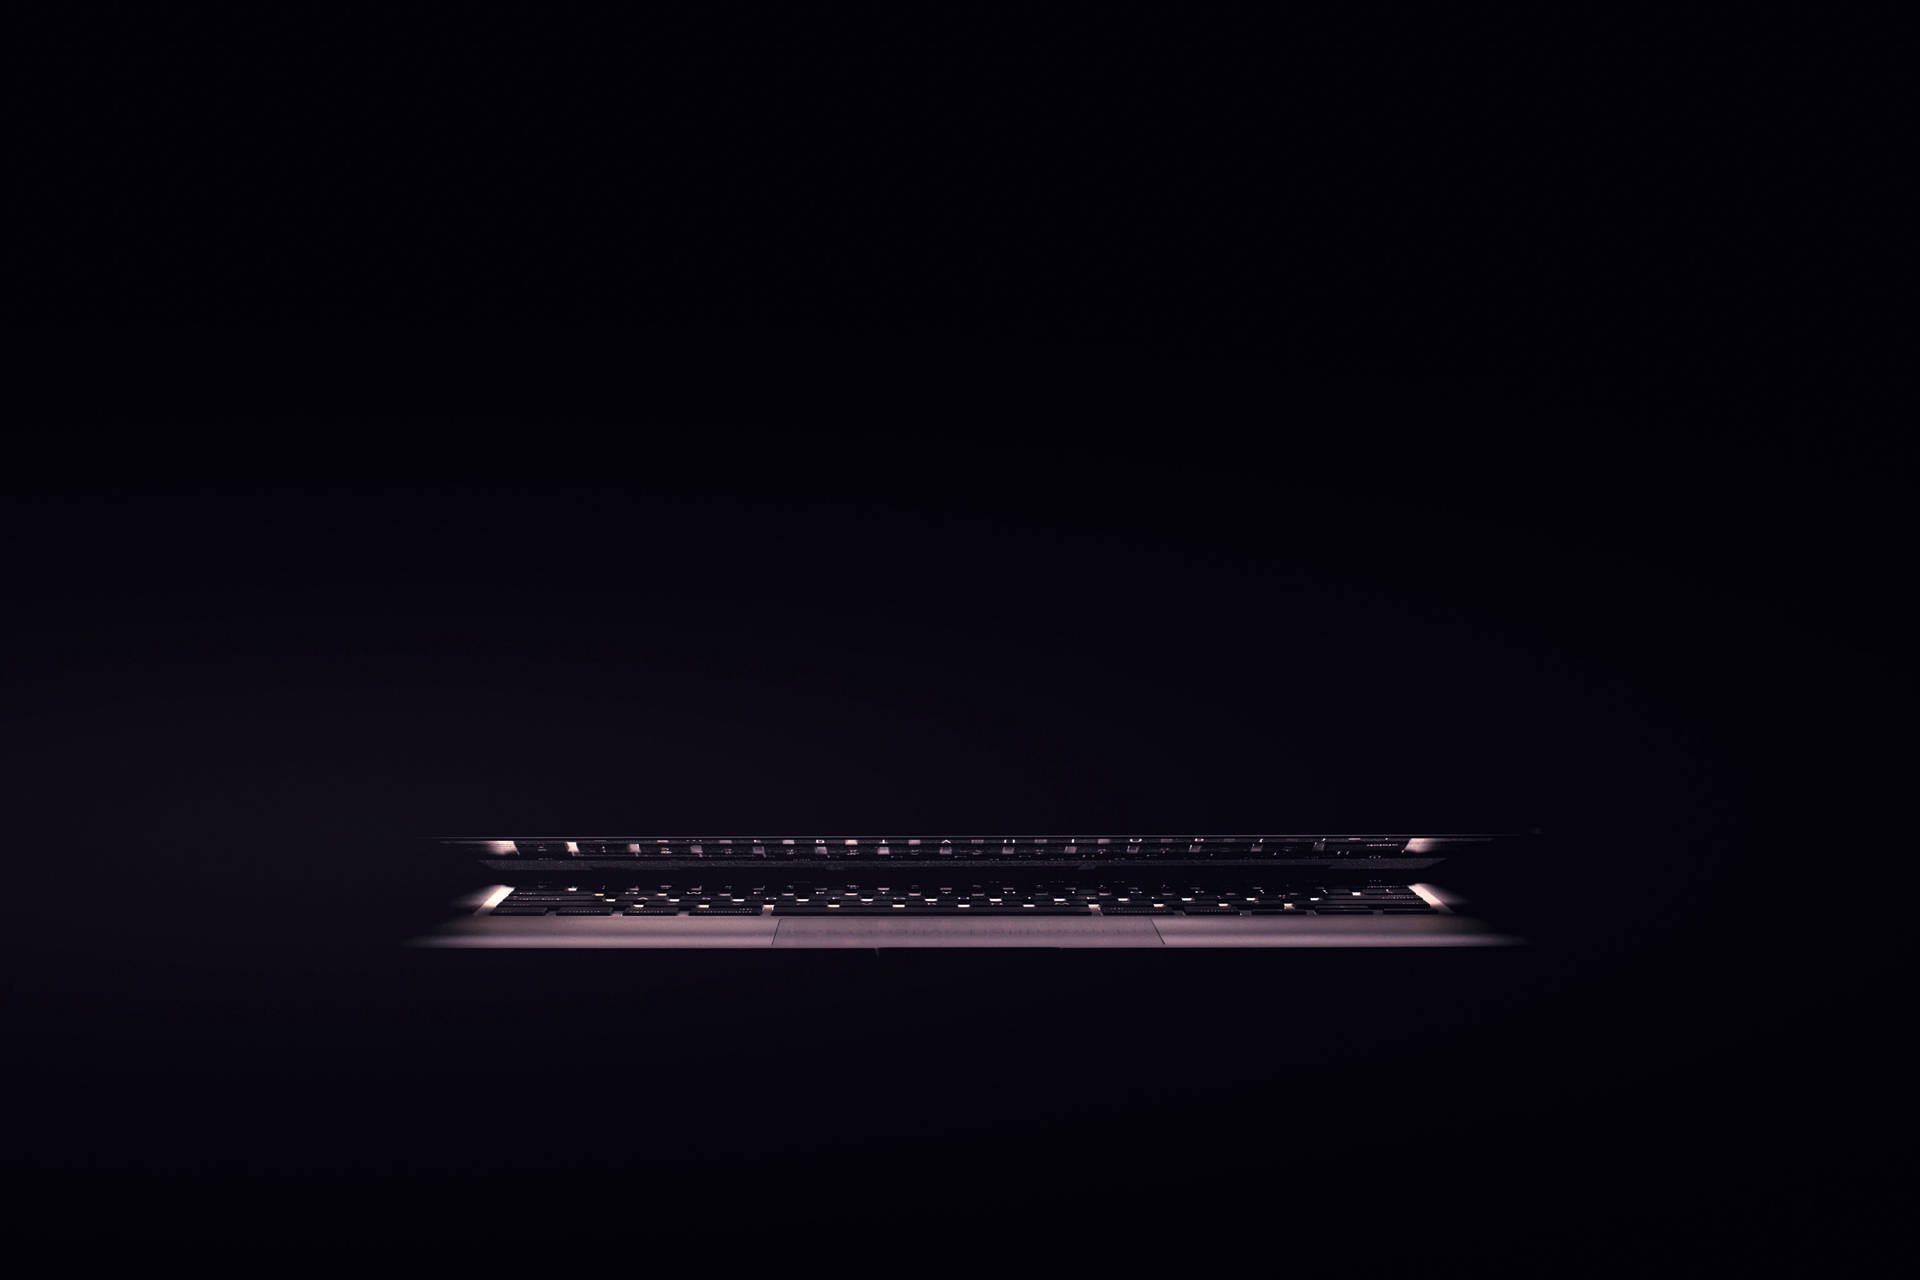 Illuminated Dark Laptop Keyboard Wallpaper